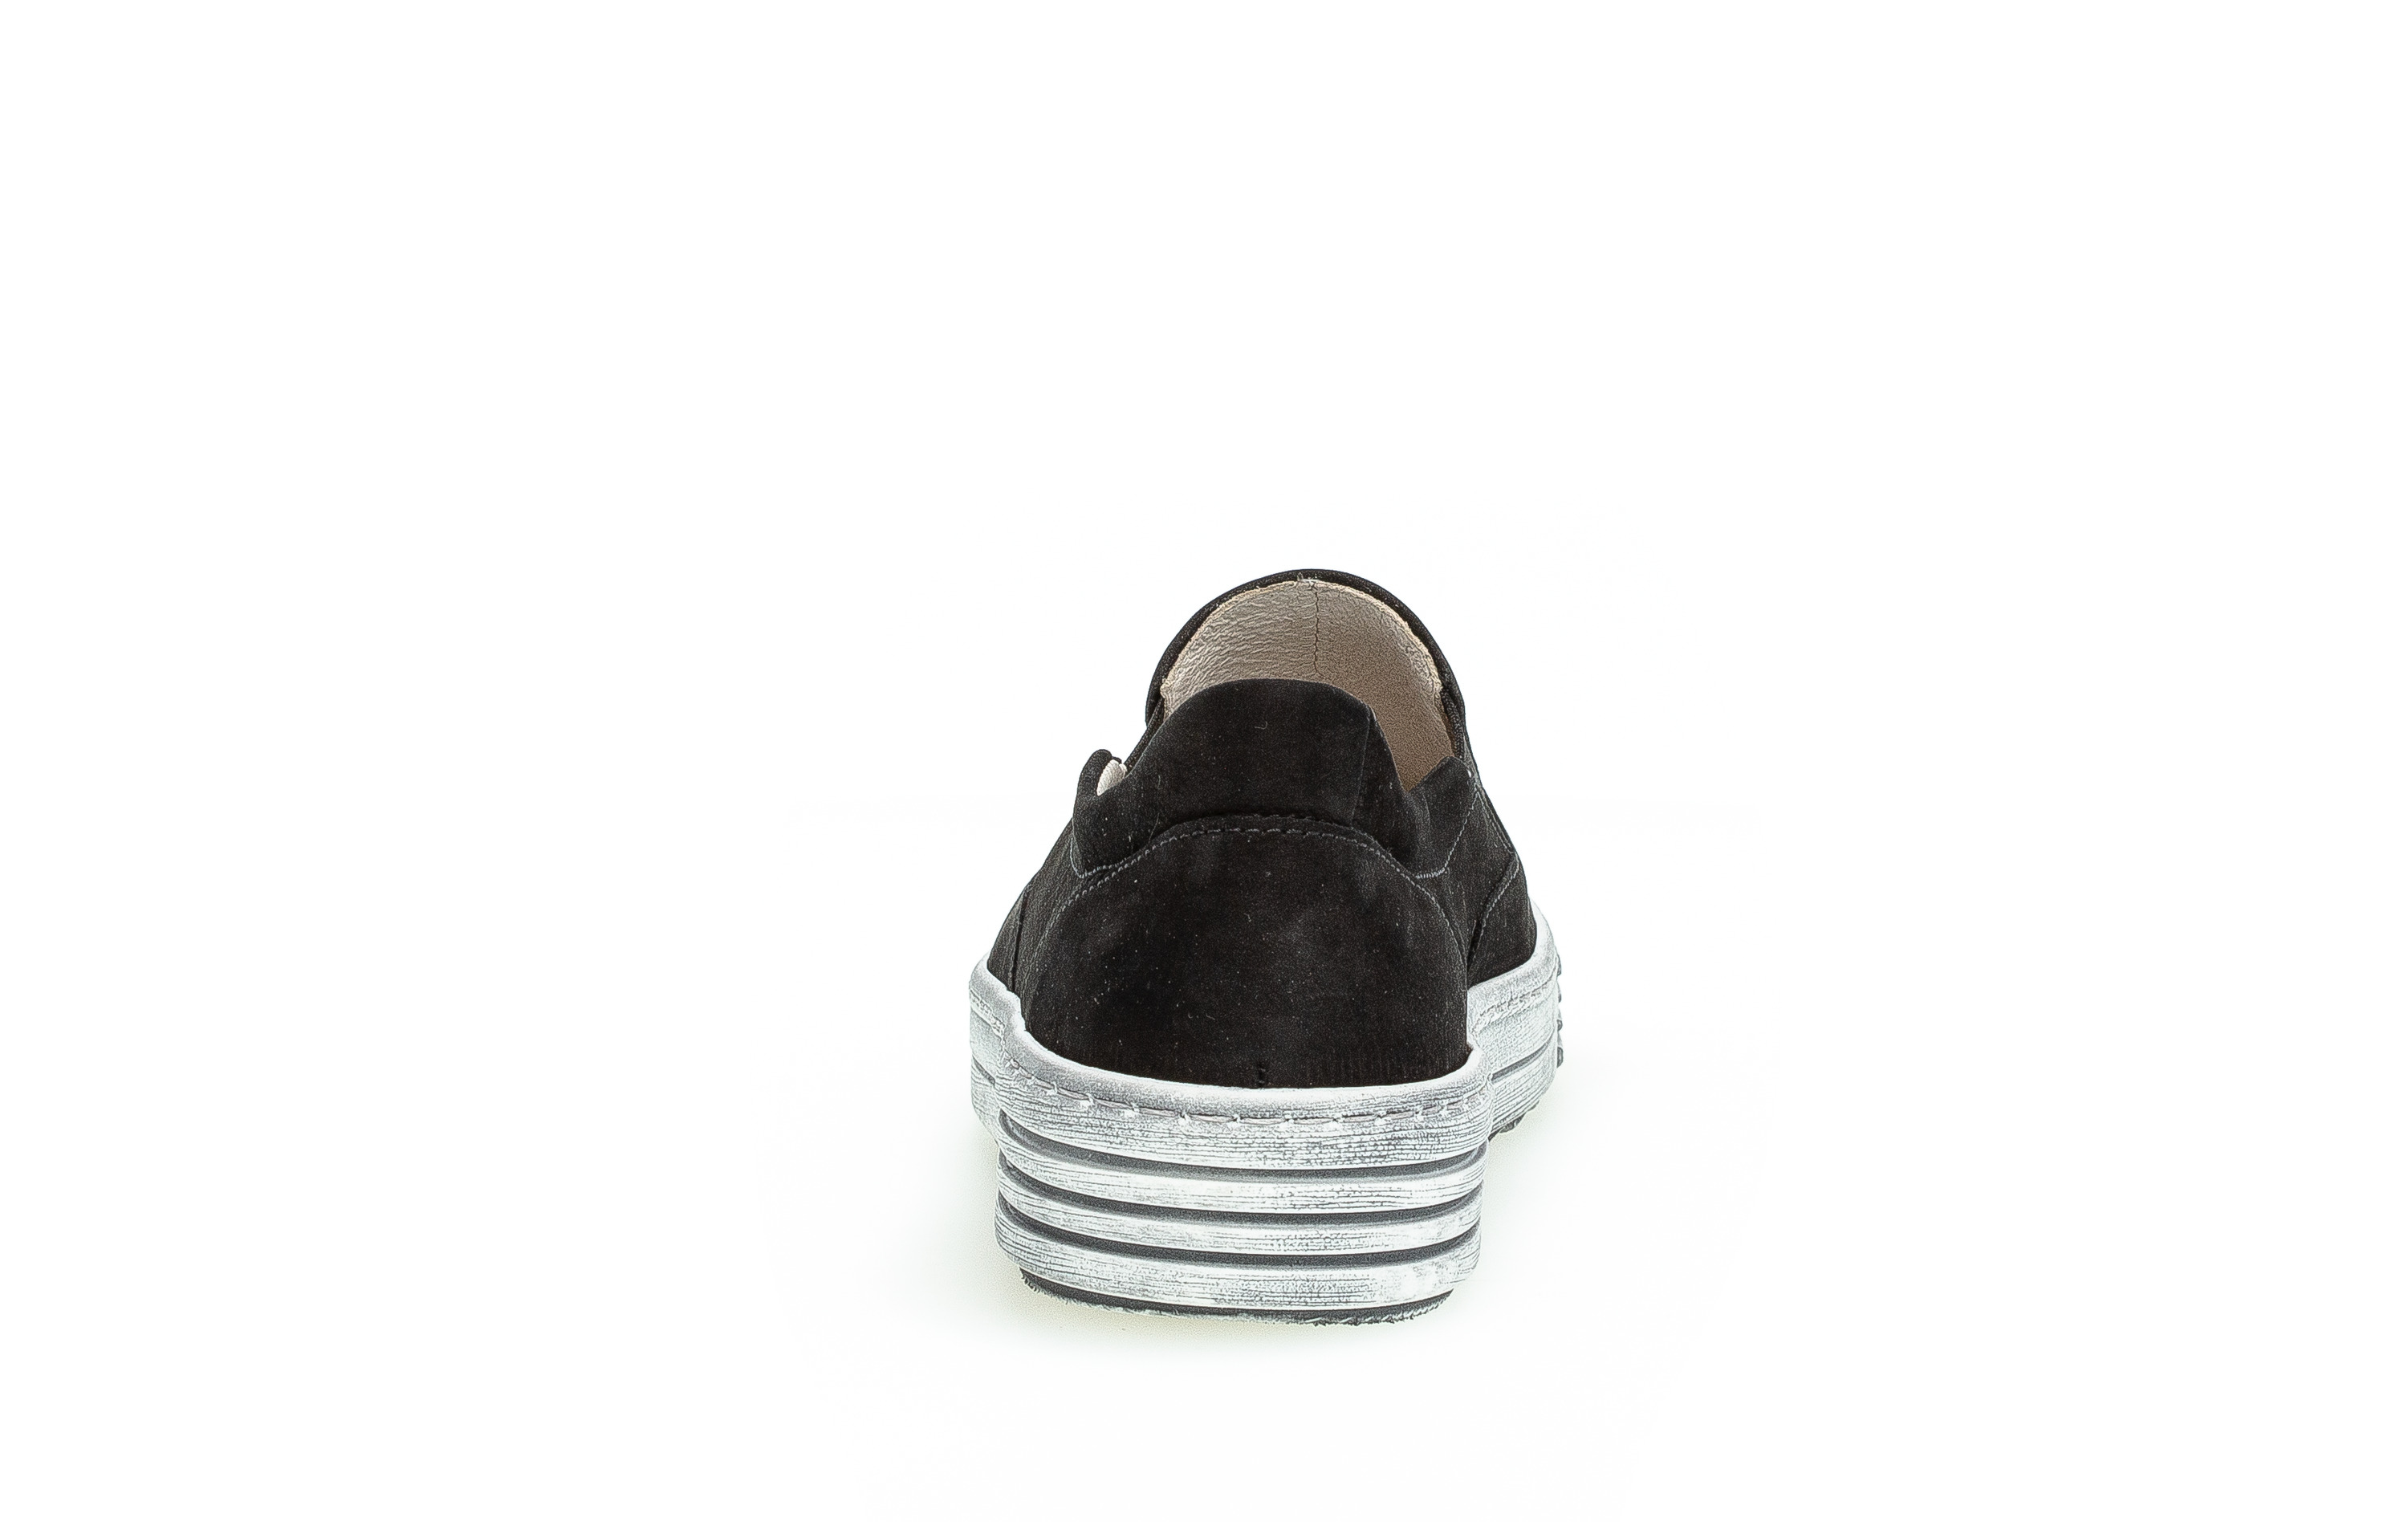 Gabor Shoes Slipper Black Nubuck leather